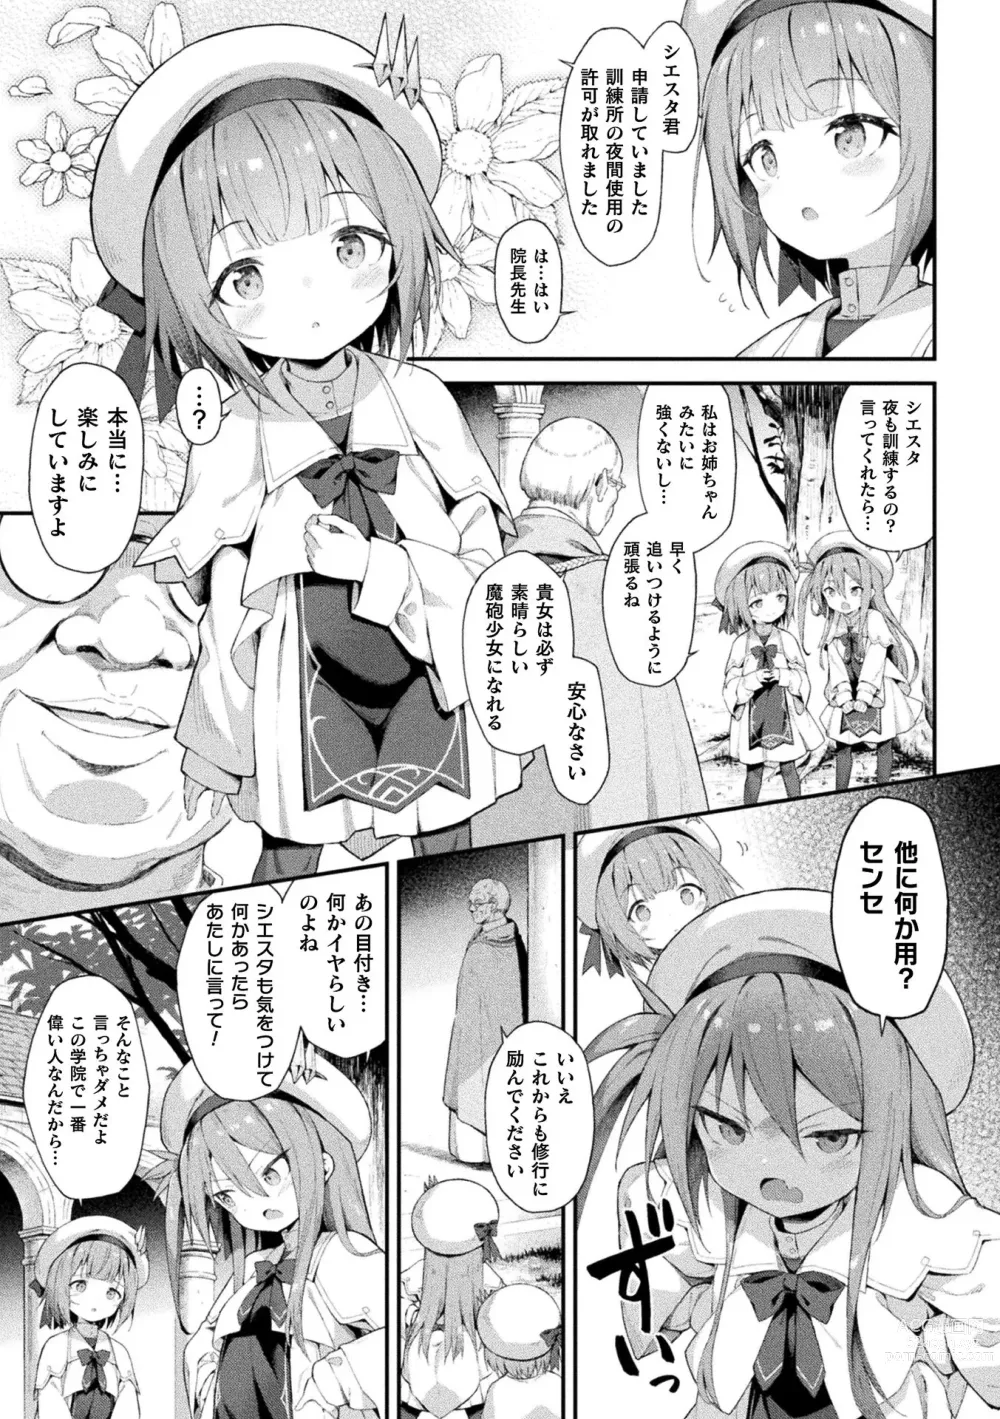 Page 5 of manga Kukkoro Heroines Vol. 32